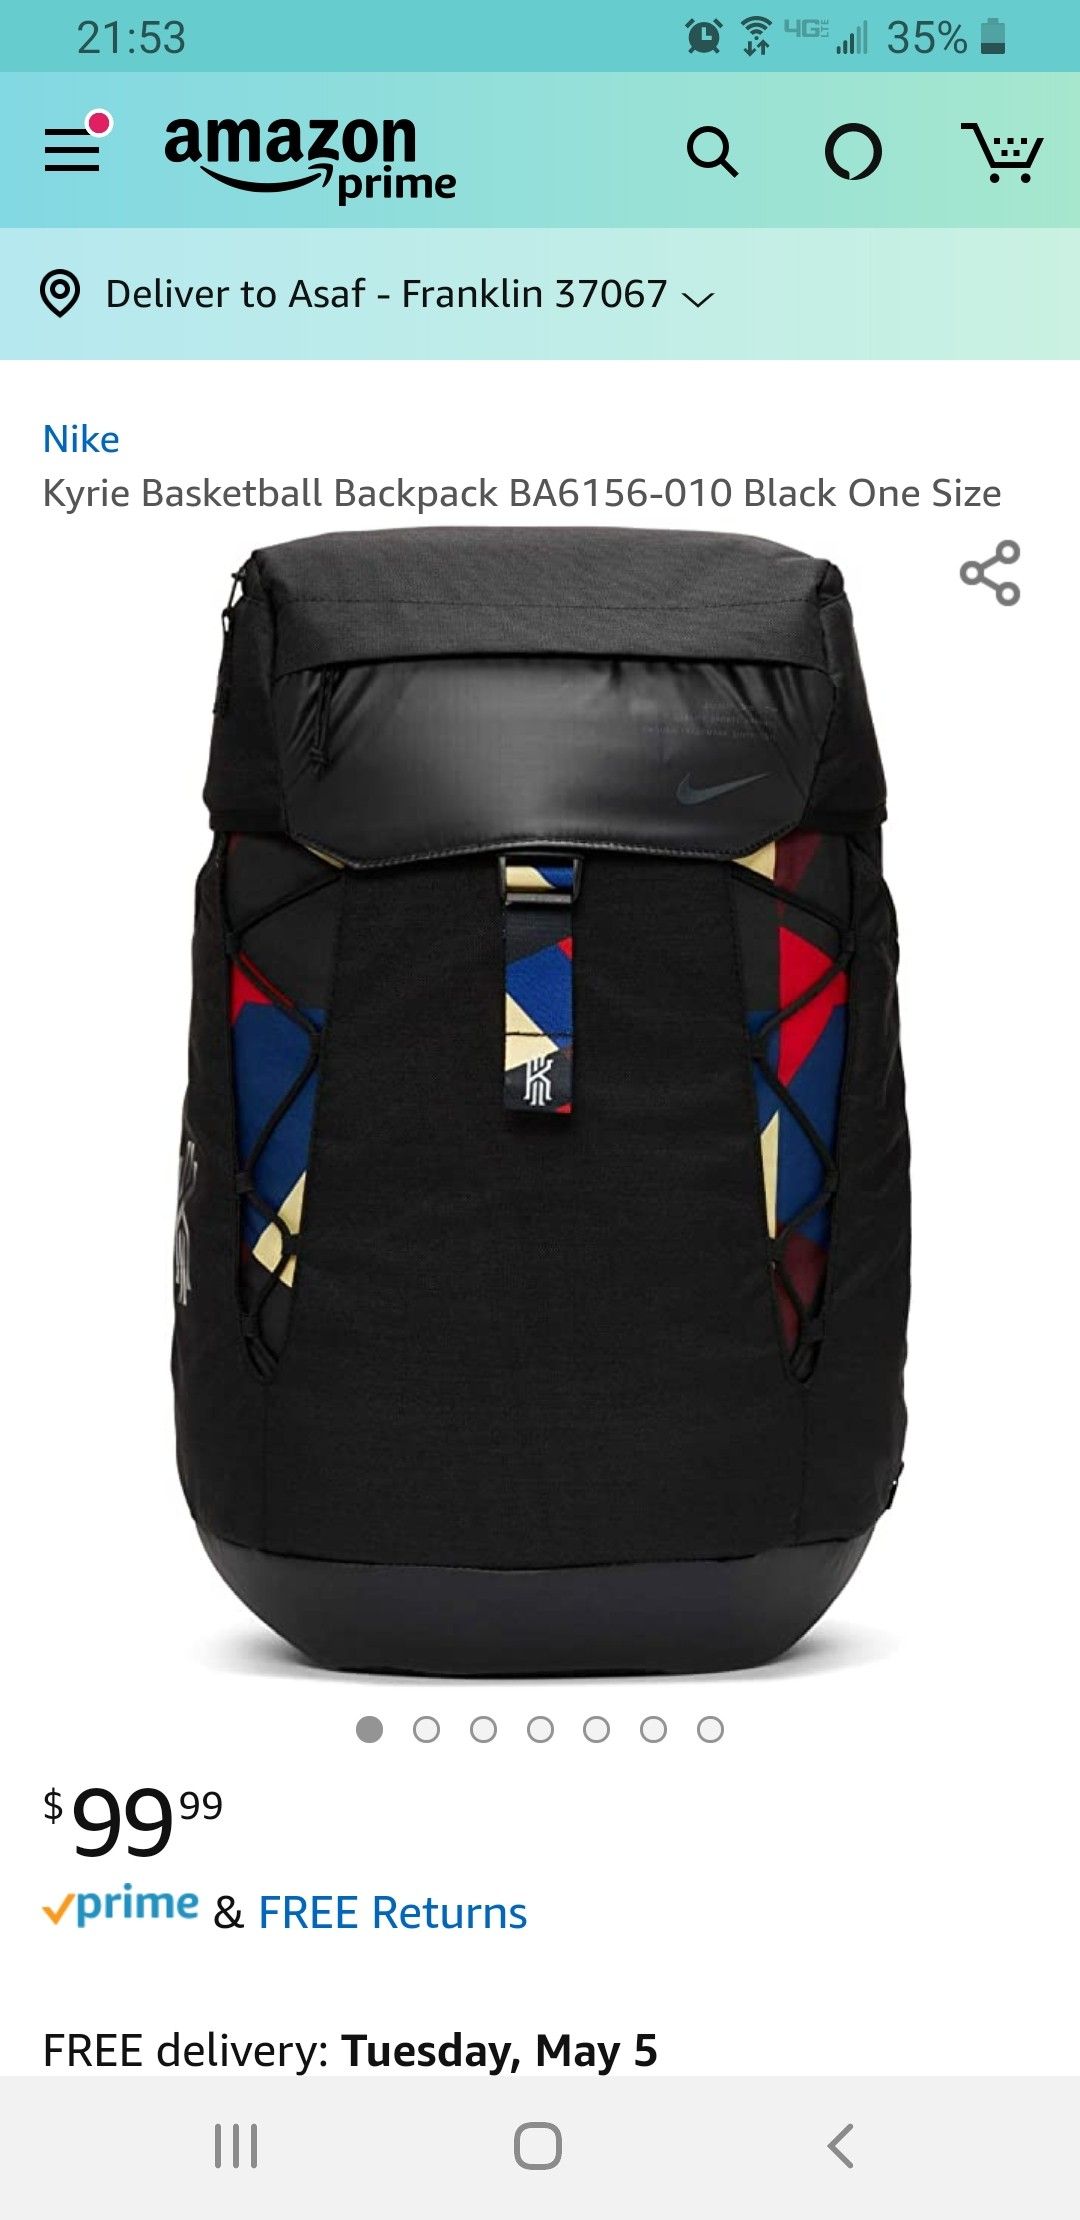 Kyrie Basketball Backpack BA6156-010 Black One Size